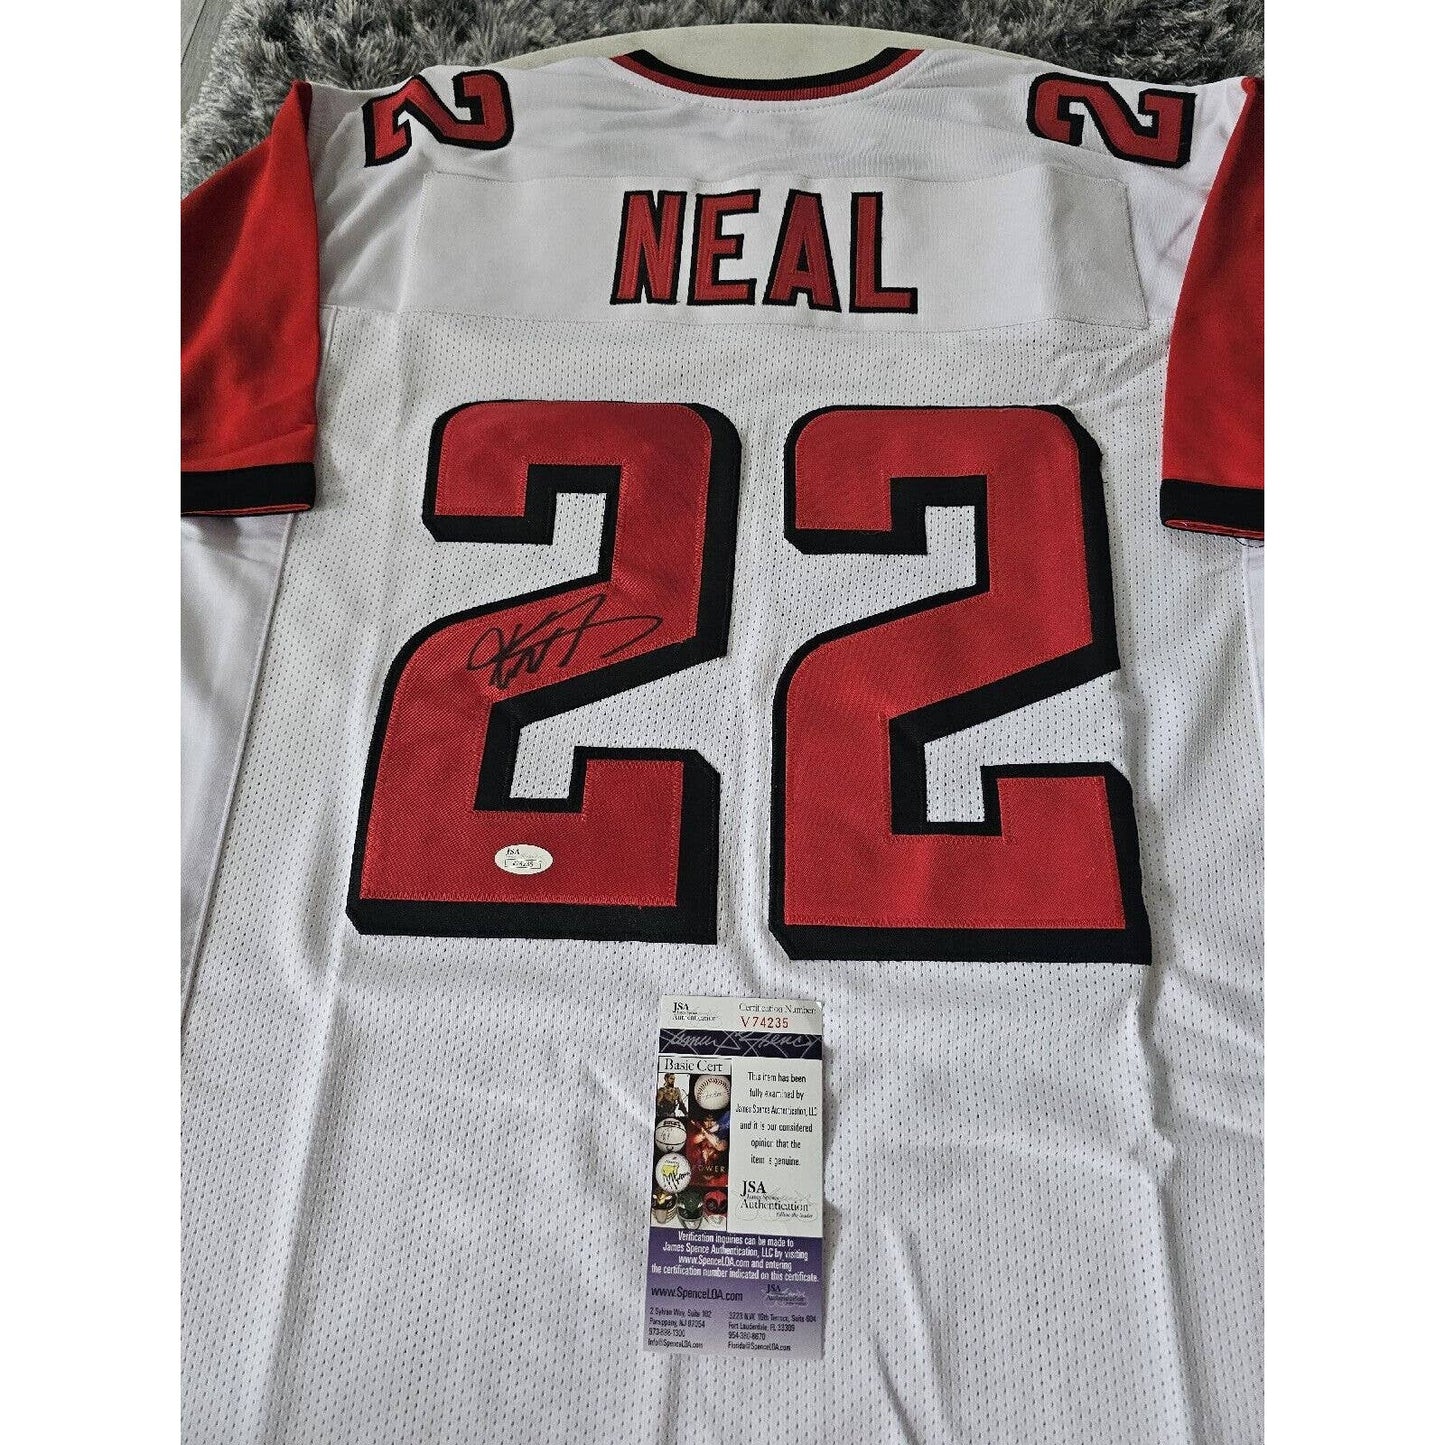 Keanu Neal Autographed/Signed Jersey JSA Atlanta Falcons